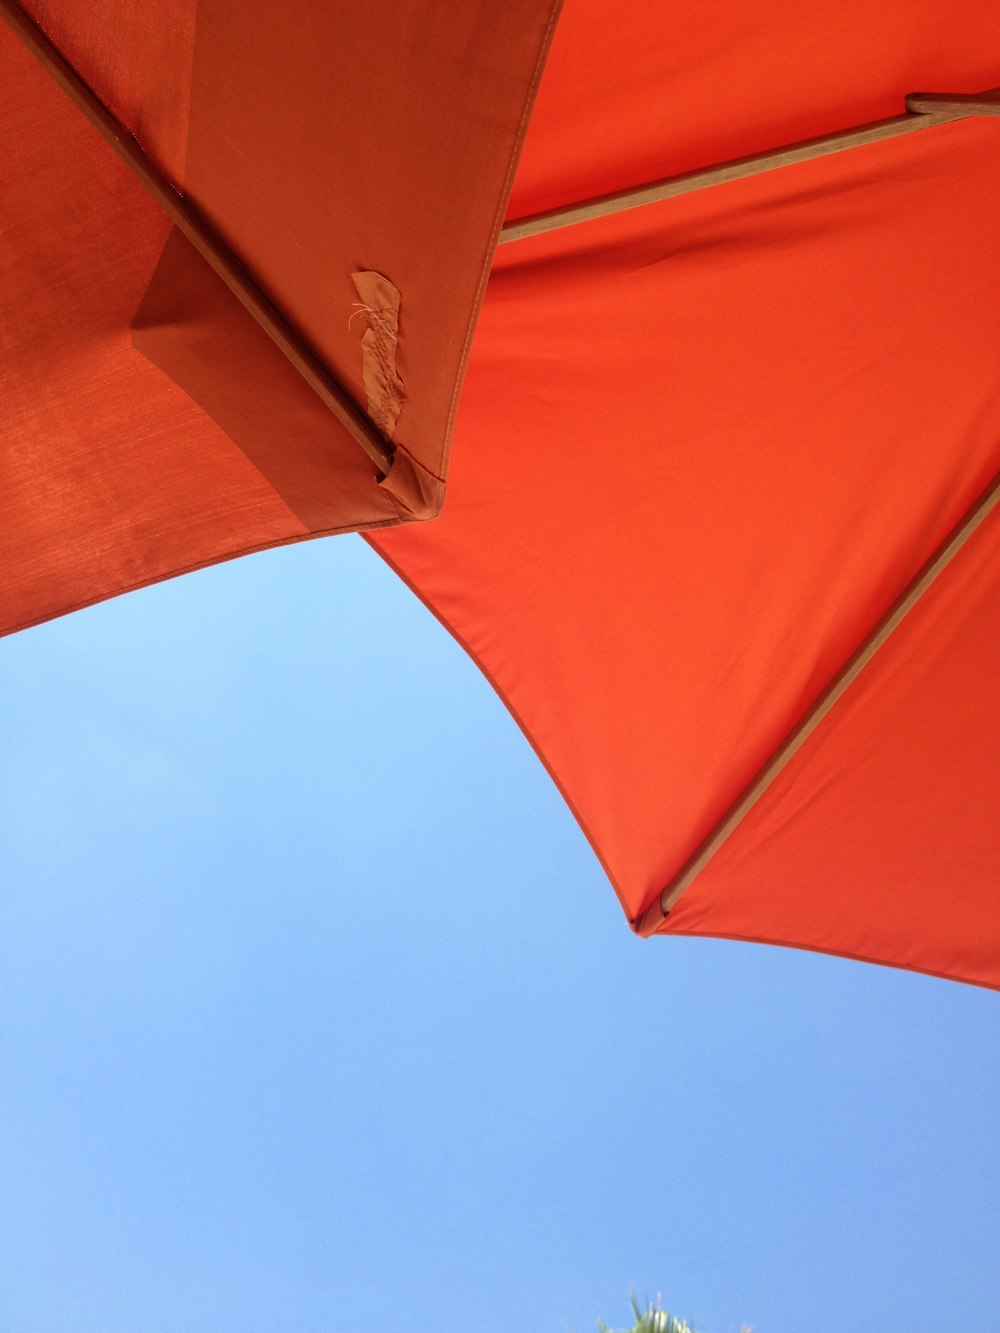 red umbrella under blue sky during daytime